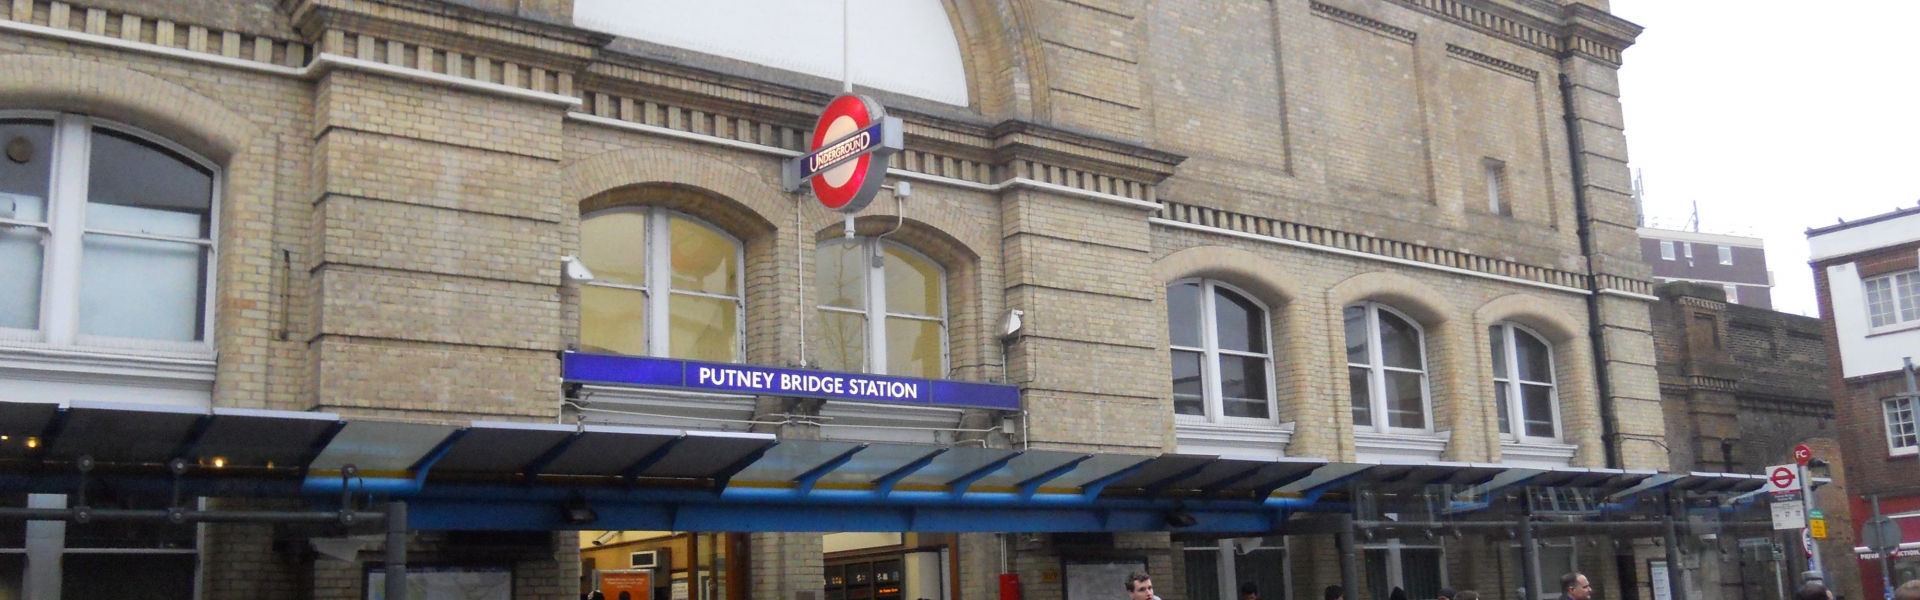 Putney Bridge Tube Station